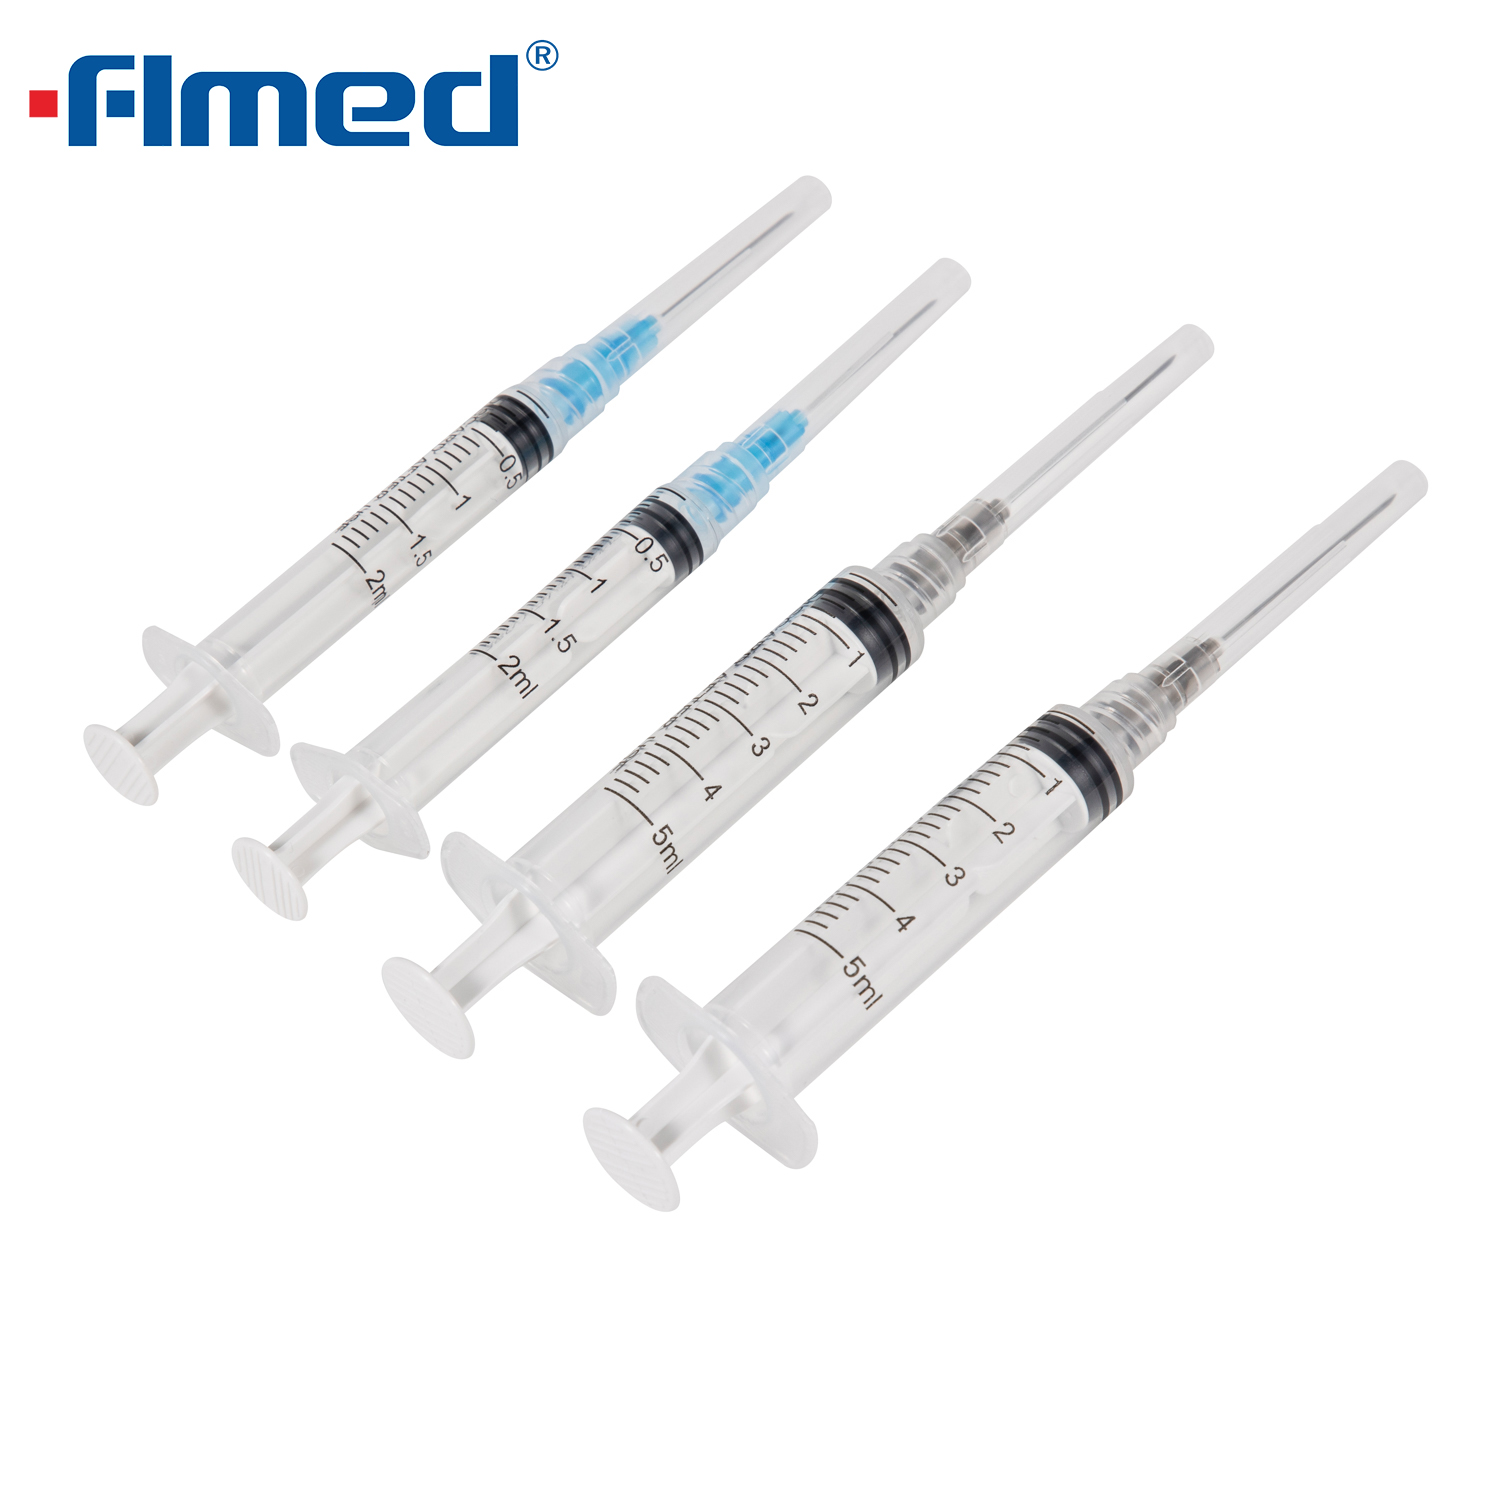 Disposable Syringe Luer Lock 3ml CE Marked